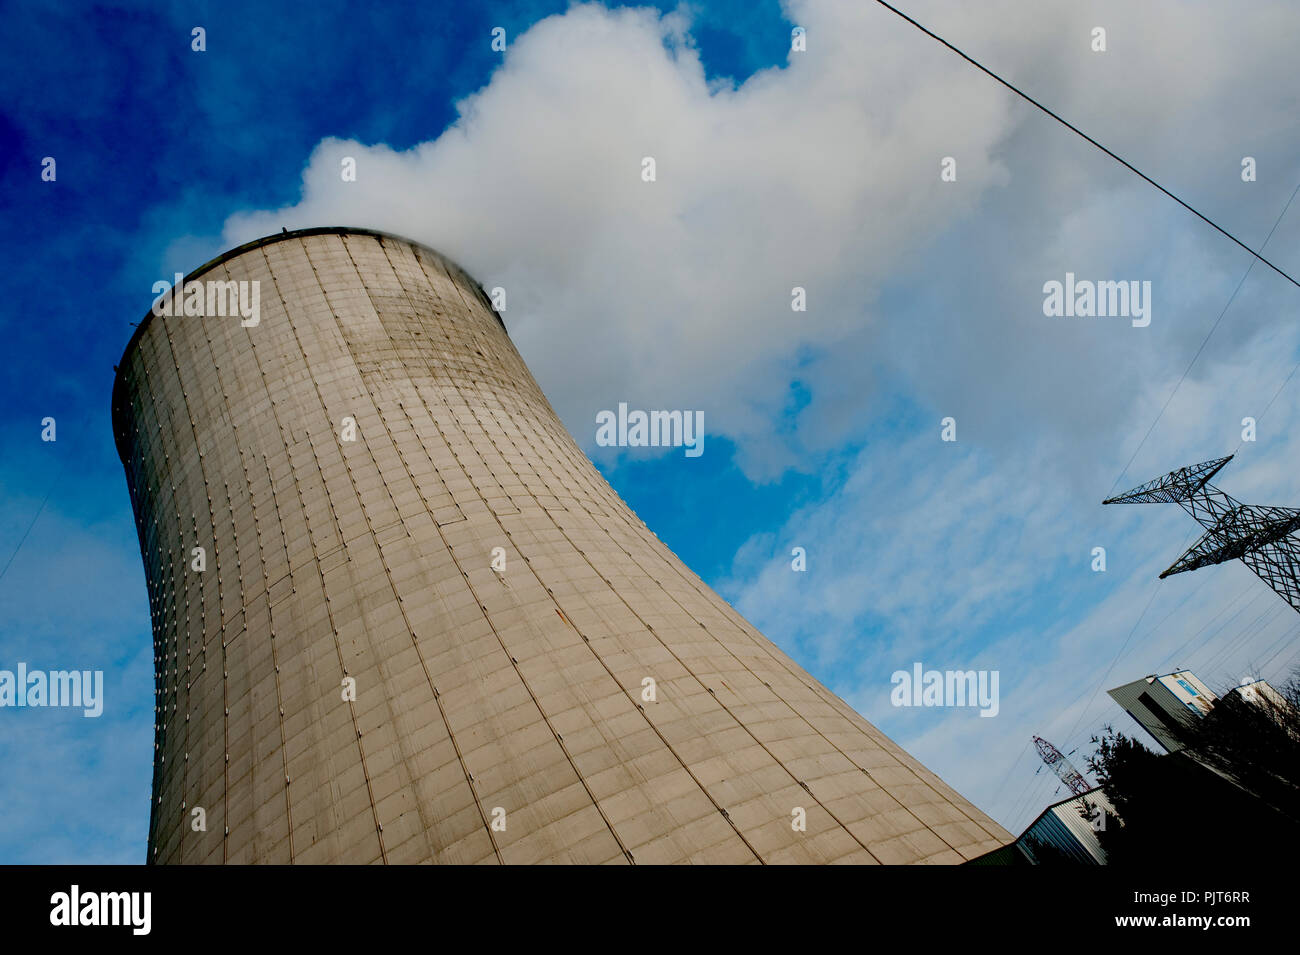 L'Electrabel centrale nucleare a Drogenbos vicino a Bruxelles (Belgio, 01/02/2010) Foto Stock